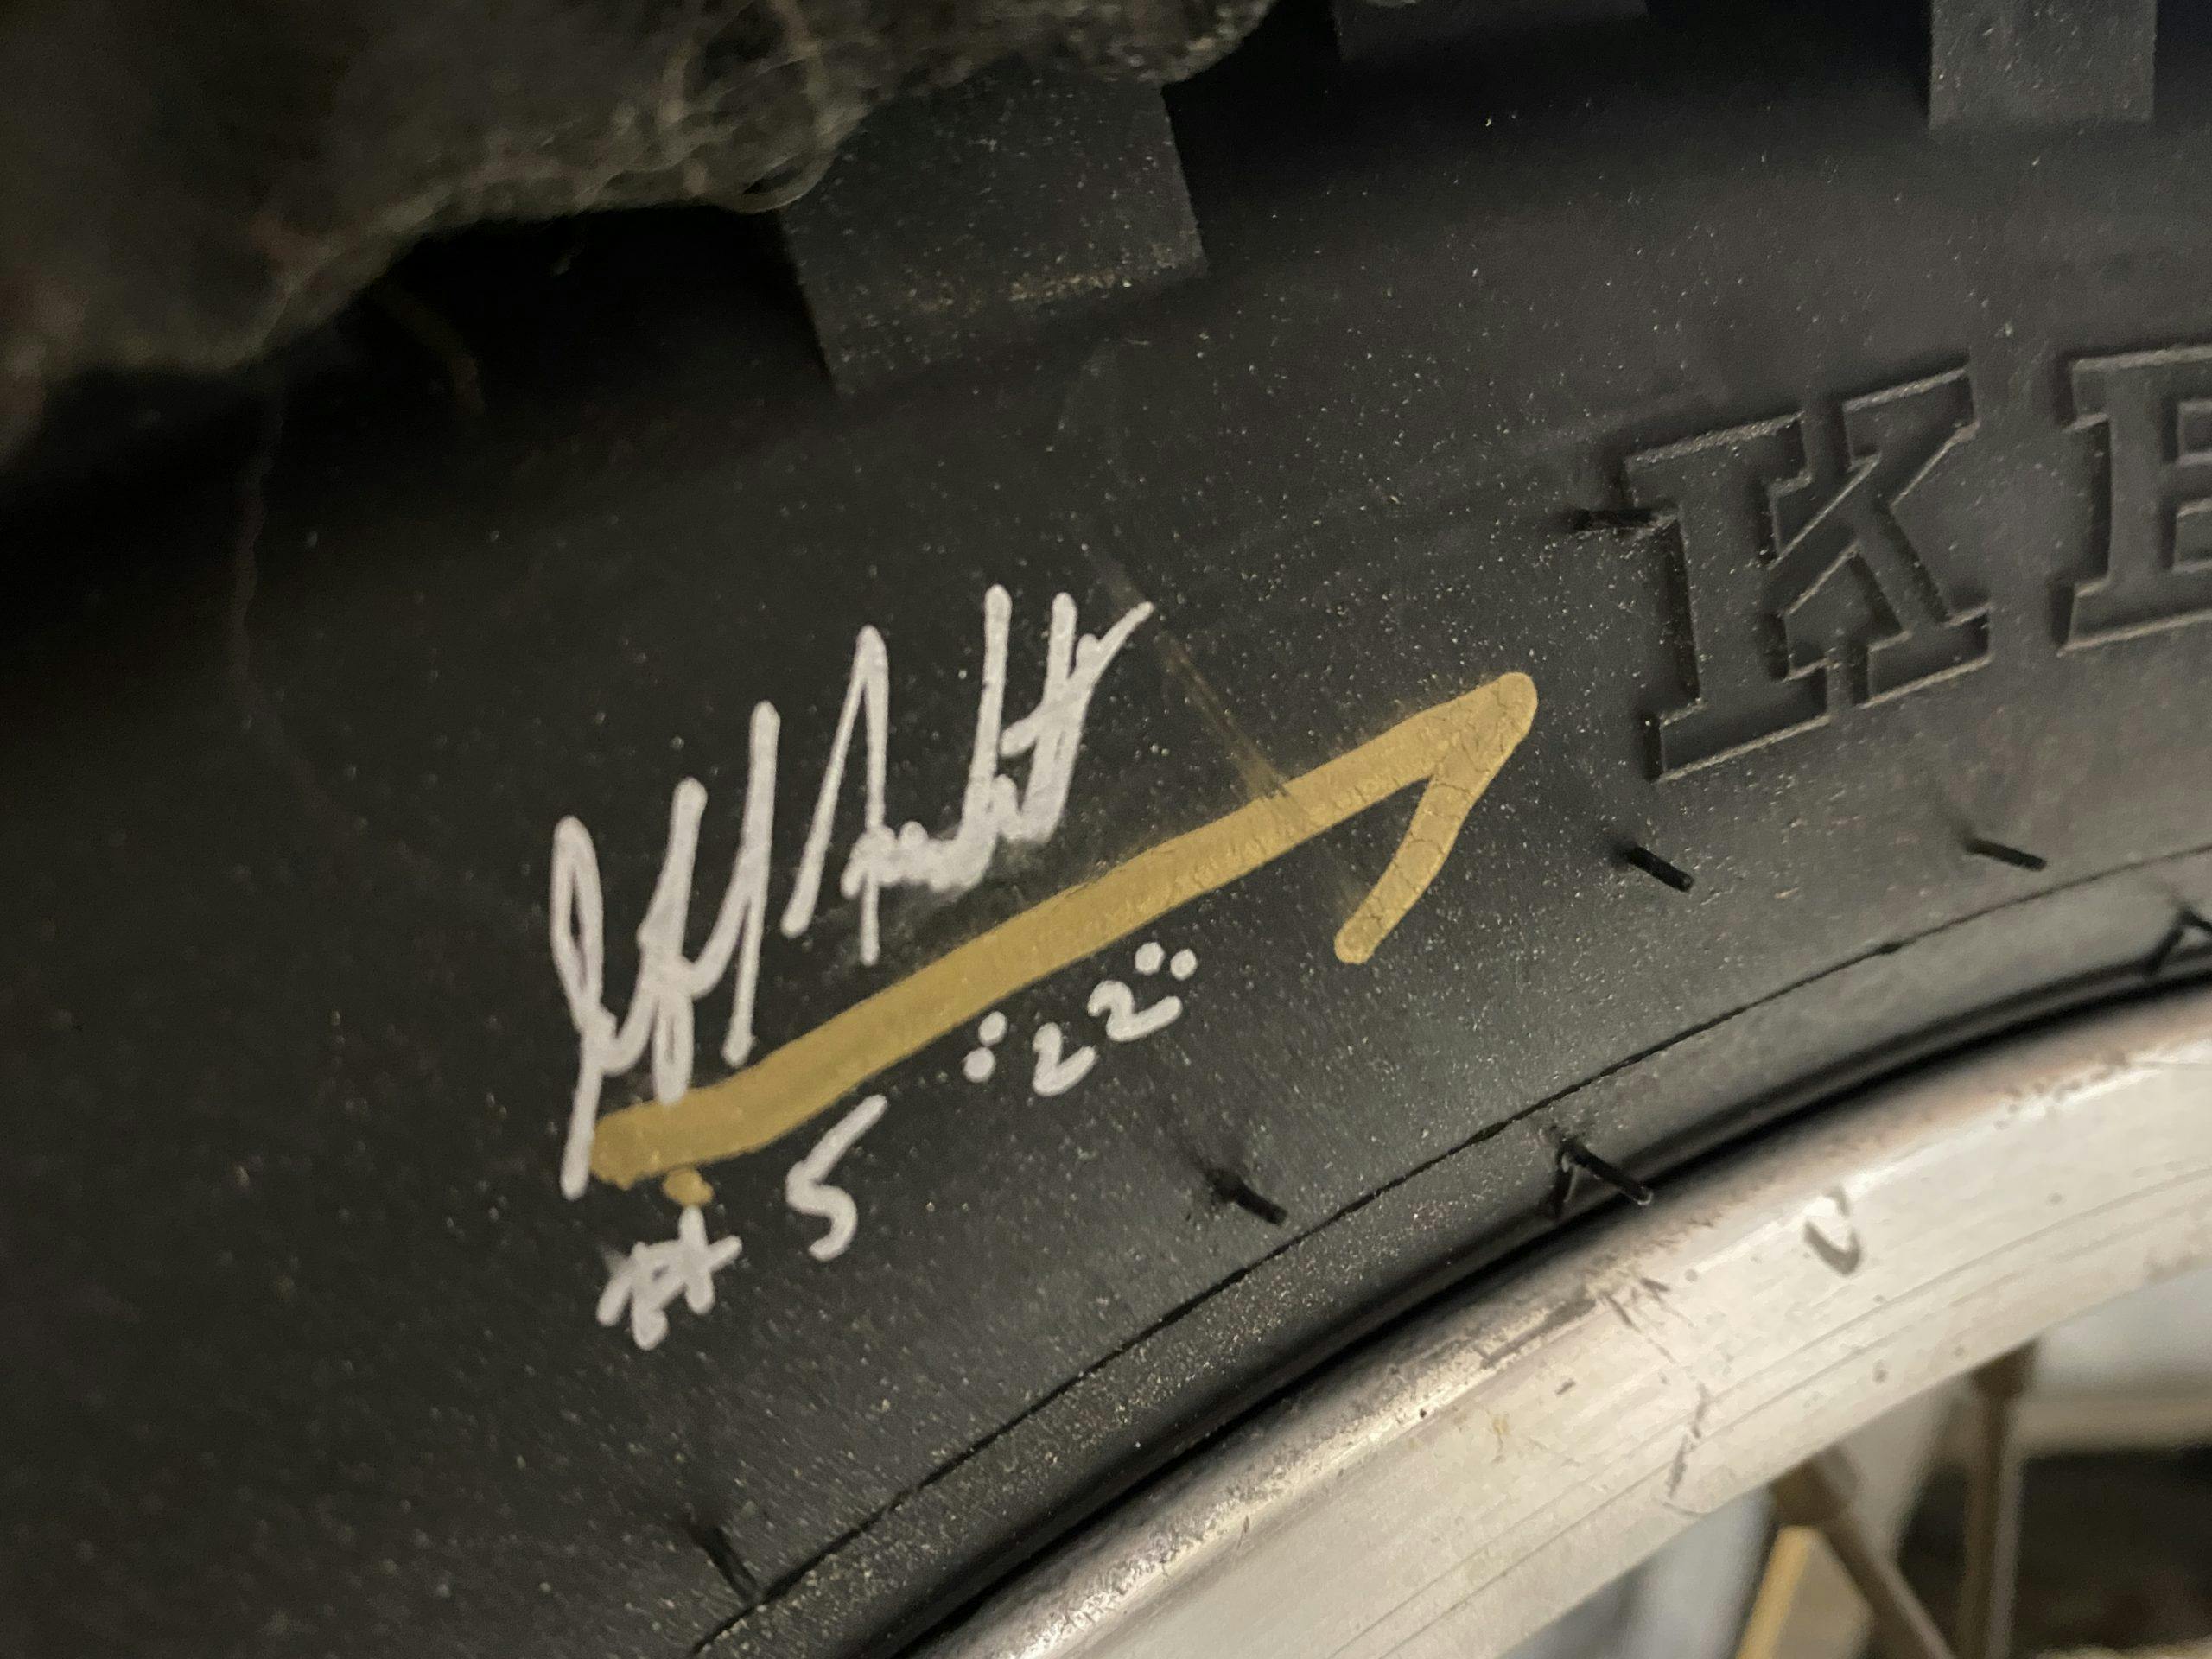 Jeff Fredette signature on ice tire